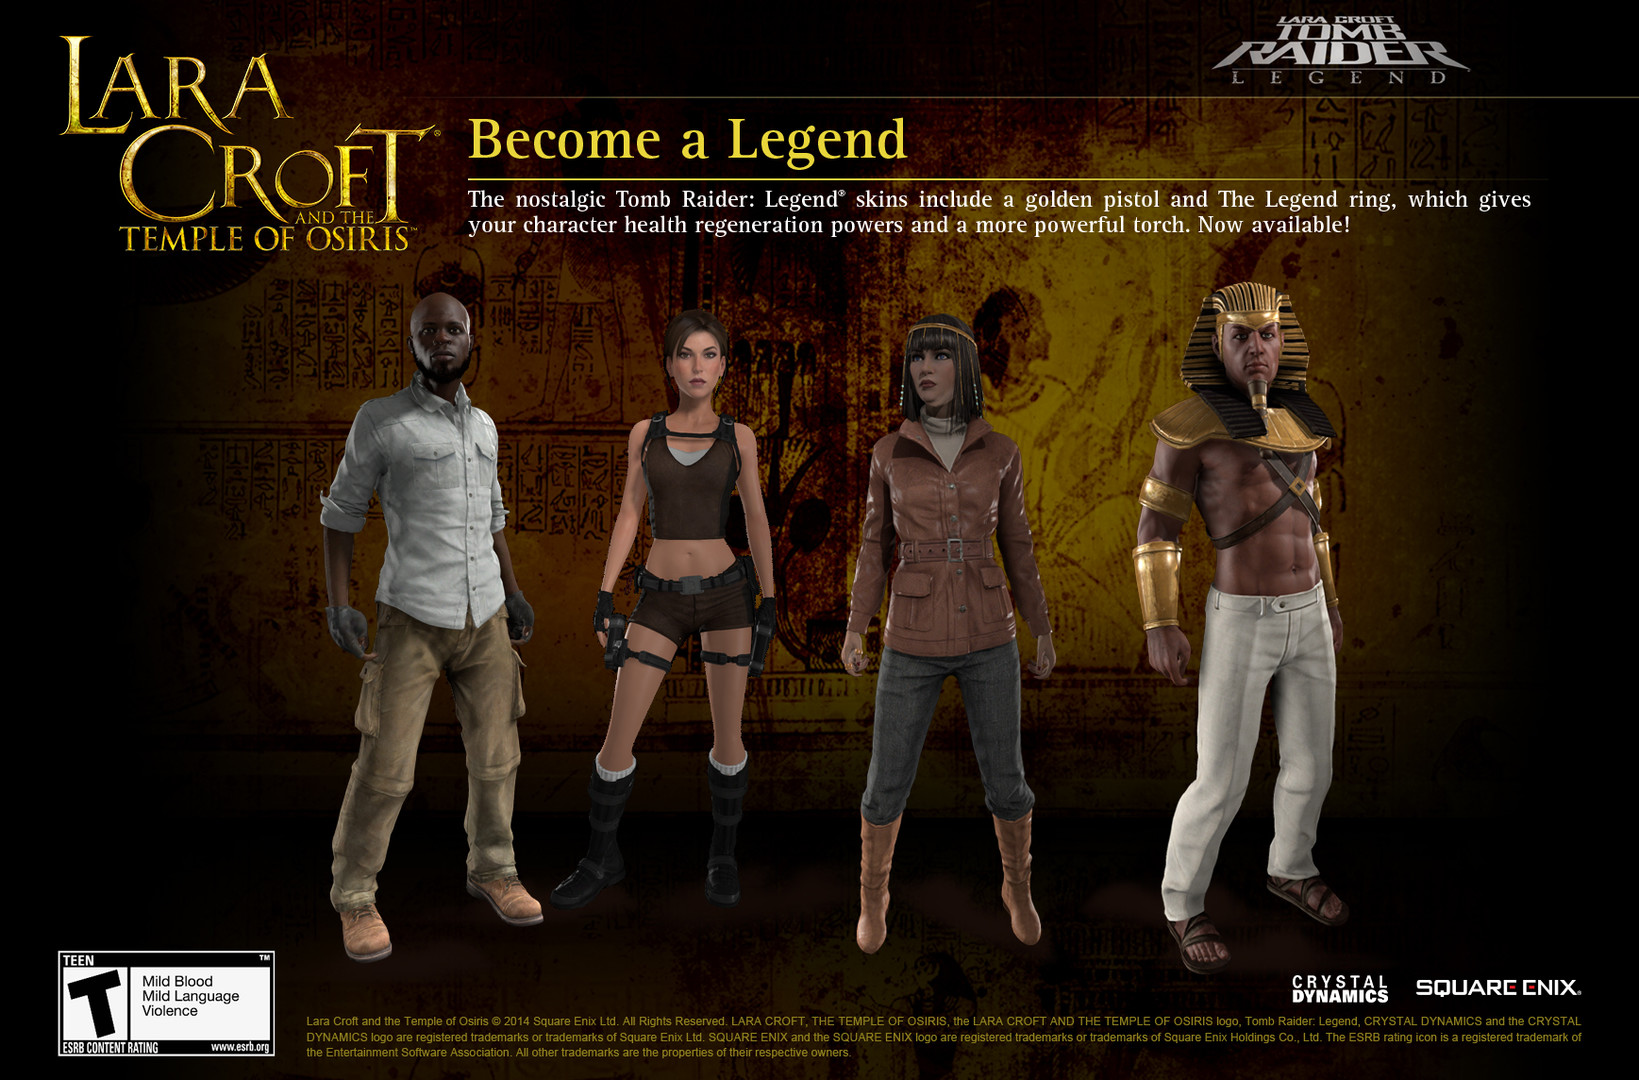 Lara Croft and the Temple of Osiris - Legend Pack Featured Screenshot #1